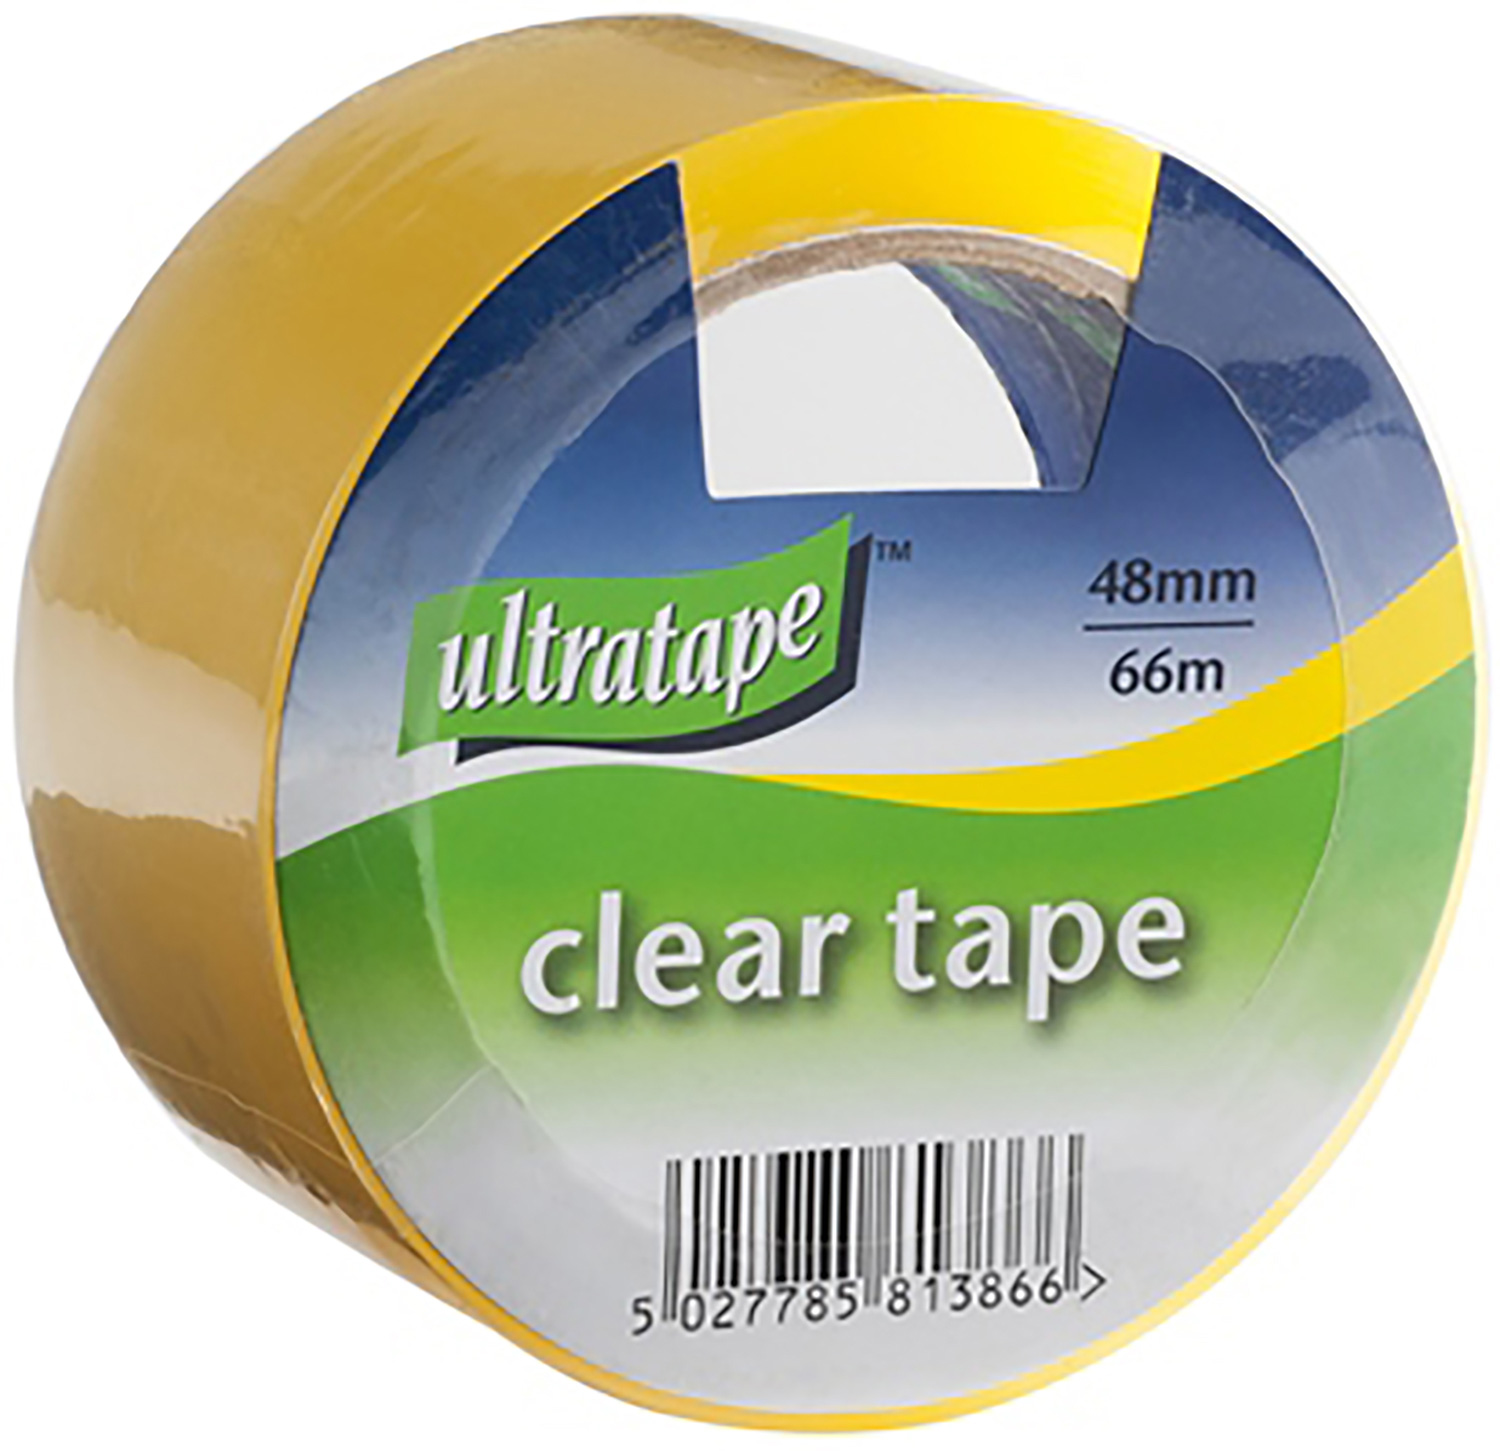 Ultratape Carton Tape 48mm x 66m Clear Carton Tape 48mm x 66m, 43 microns, Card